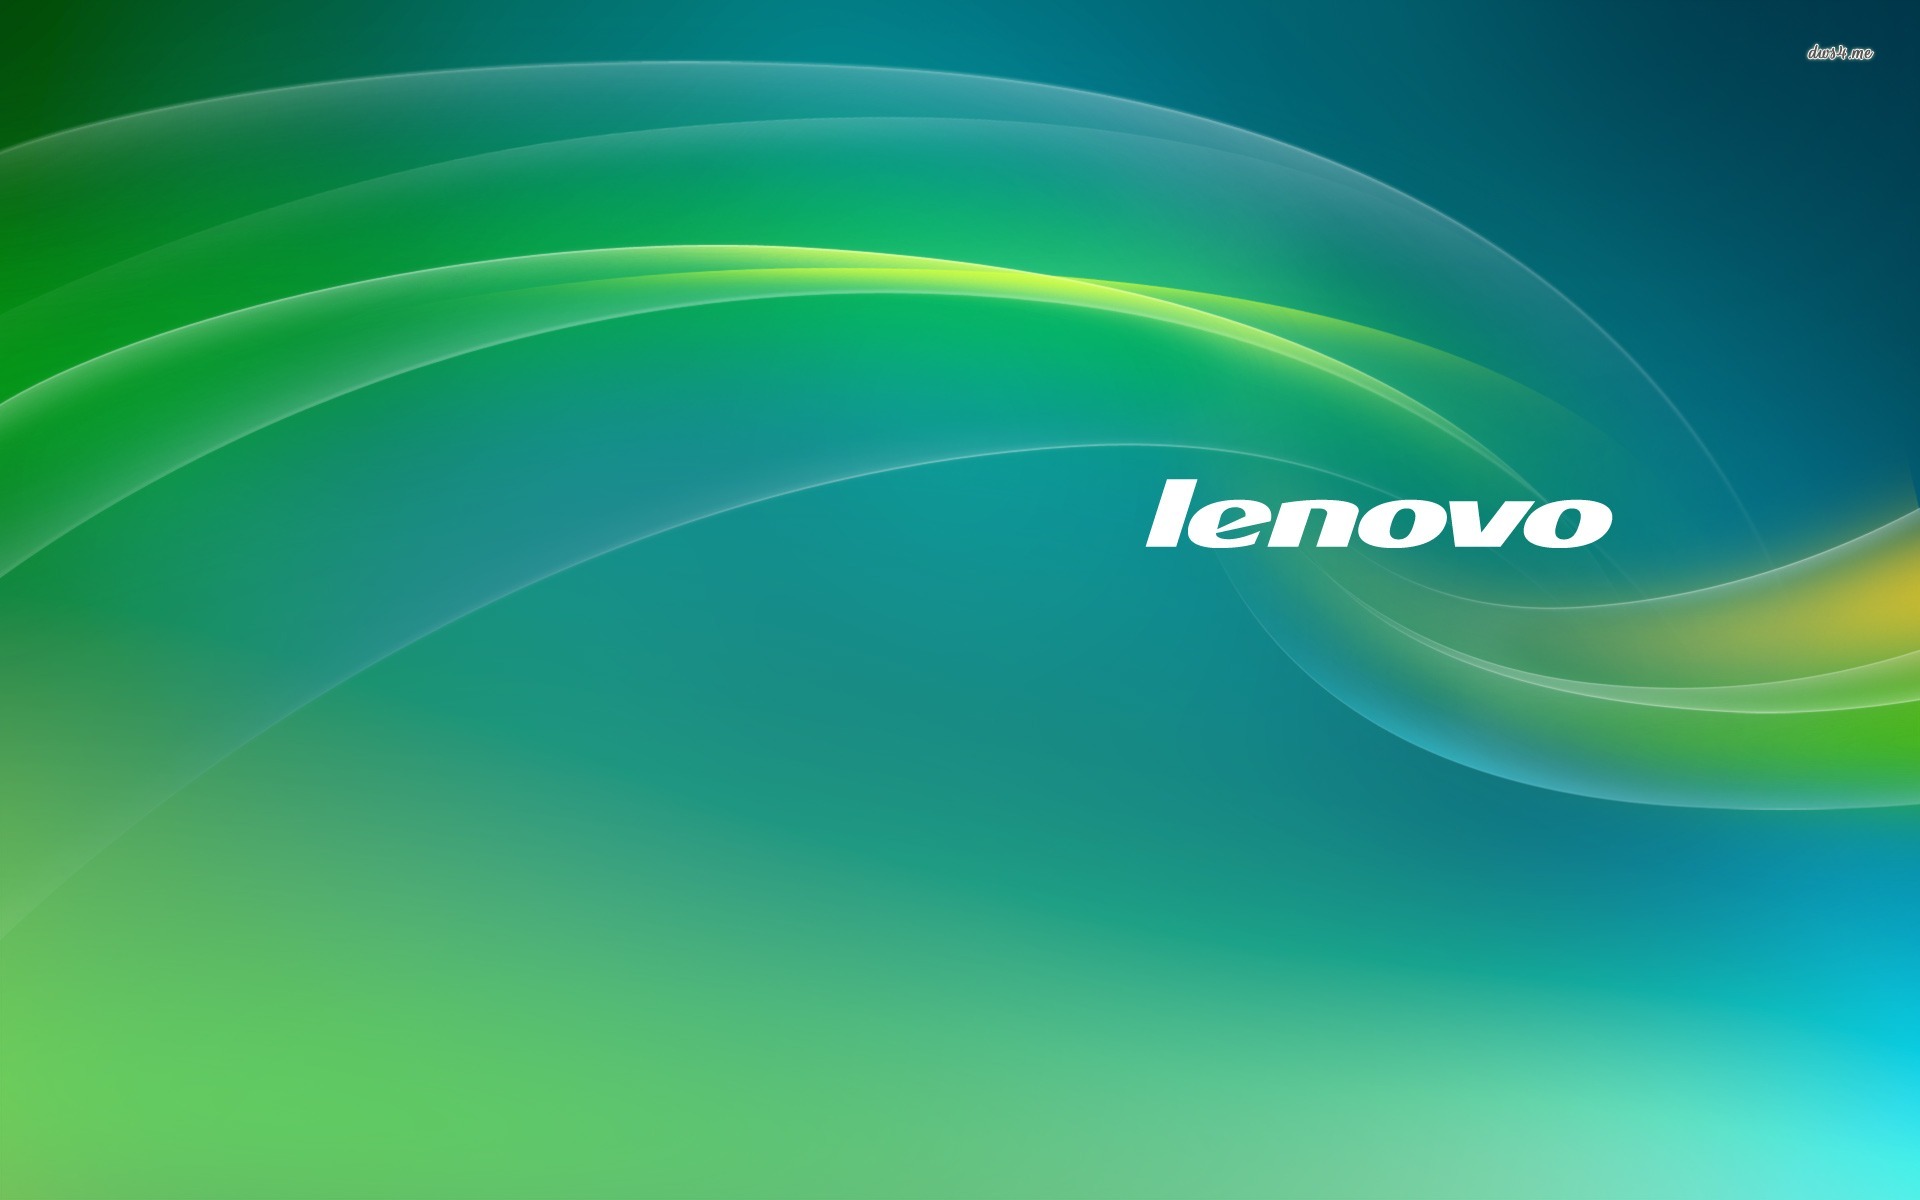 Lenovo Wallpaper - wallpaper